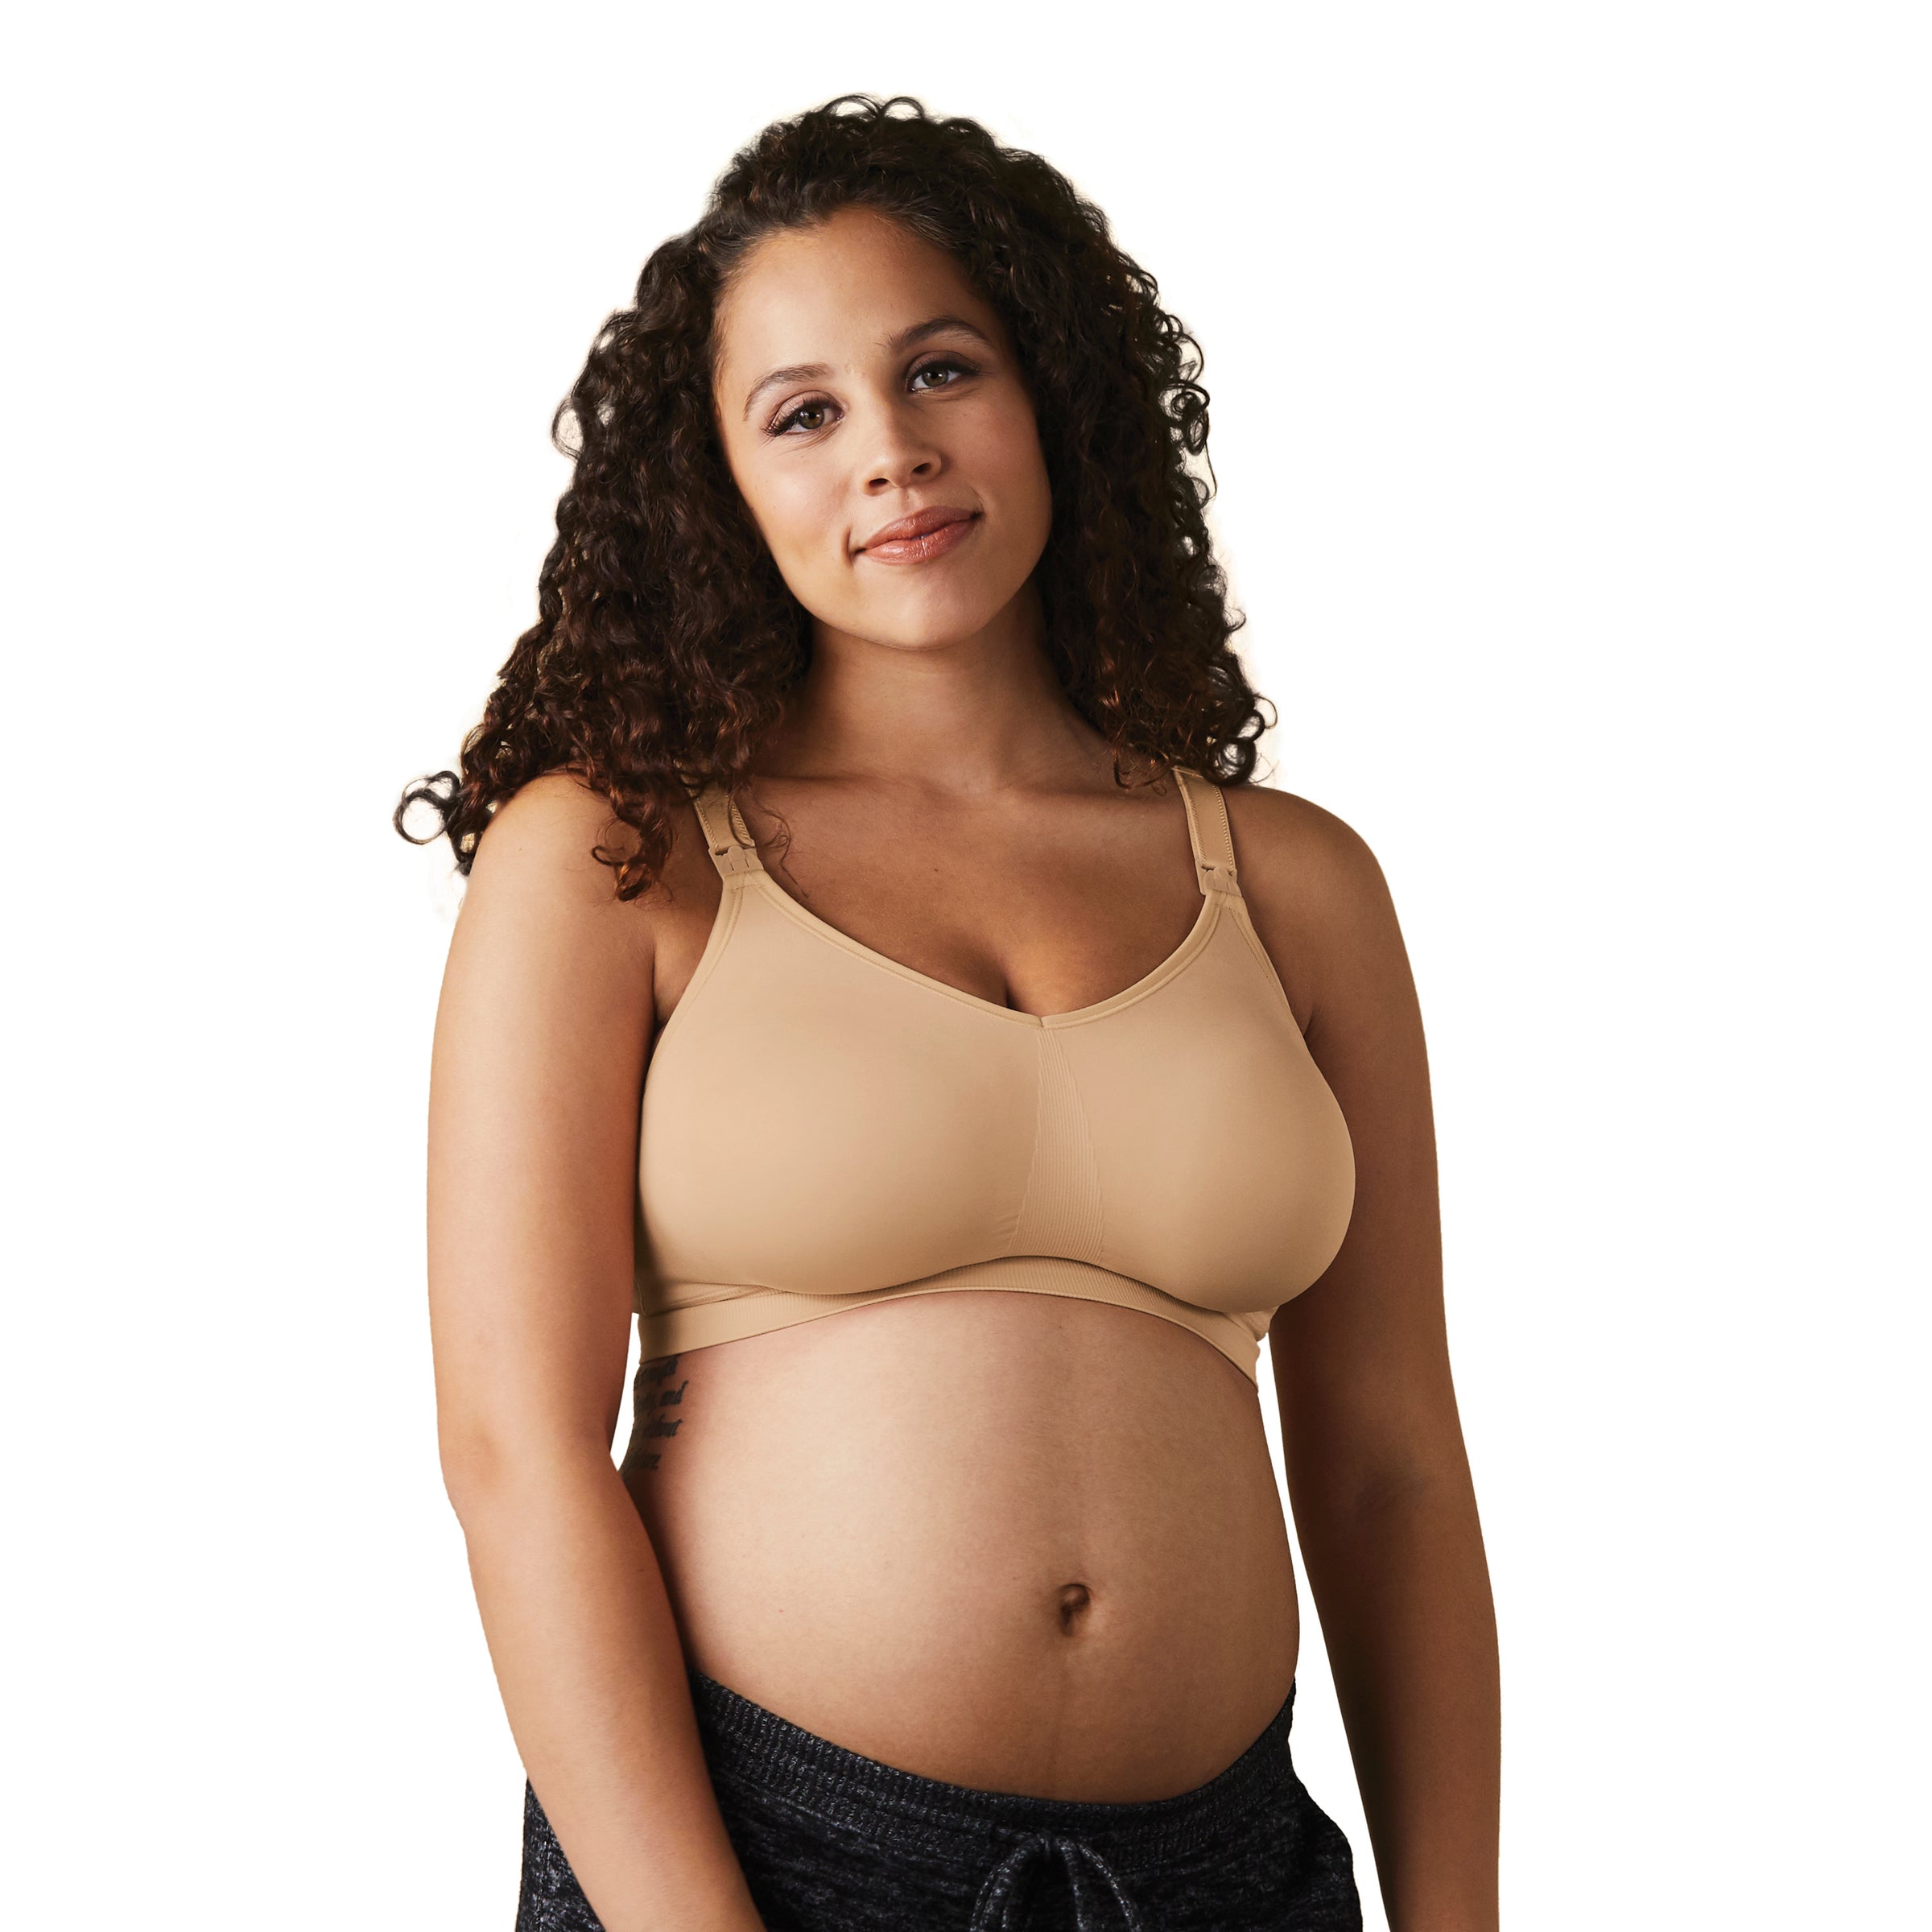 Nuni Wellness - Bra off o'clock. ⏰ Breasts contain an abundance